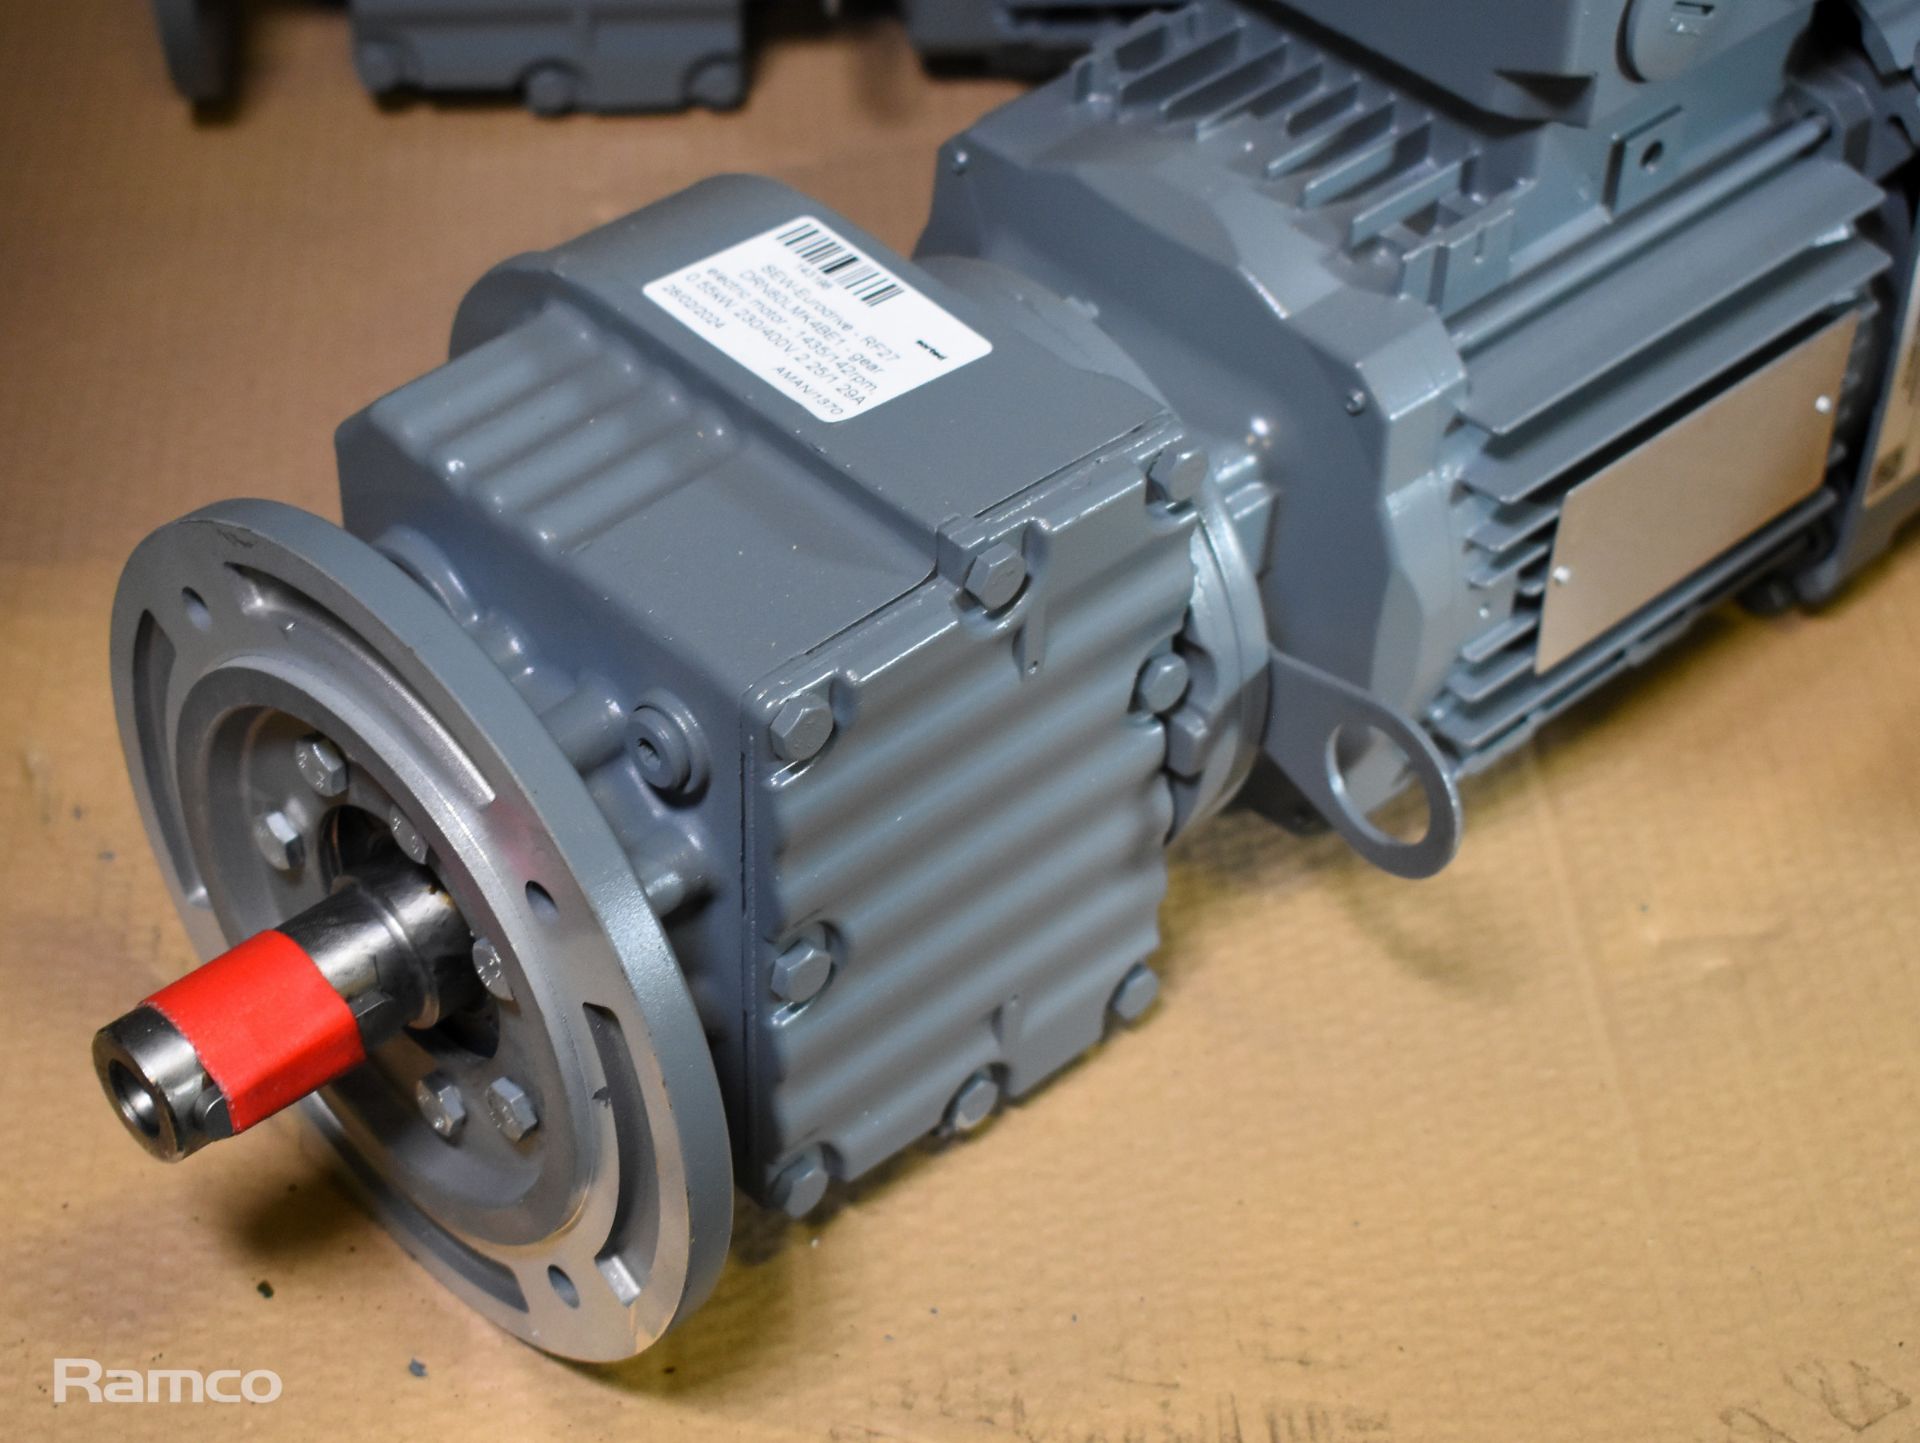 3x SEW-Eurodrive - RF27 DRN80LMK4BE1 electric gear motors - 1435/142rpm, 0.55kW, 230/400V, 2.25/1.29 - Image 5 of 5